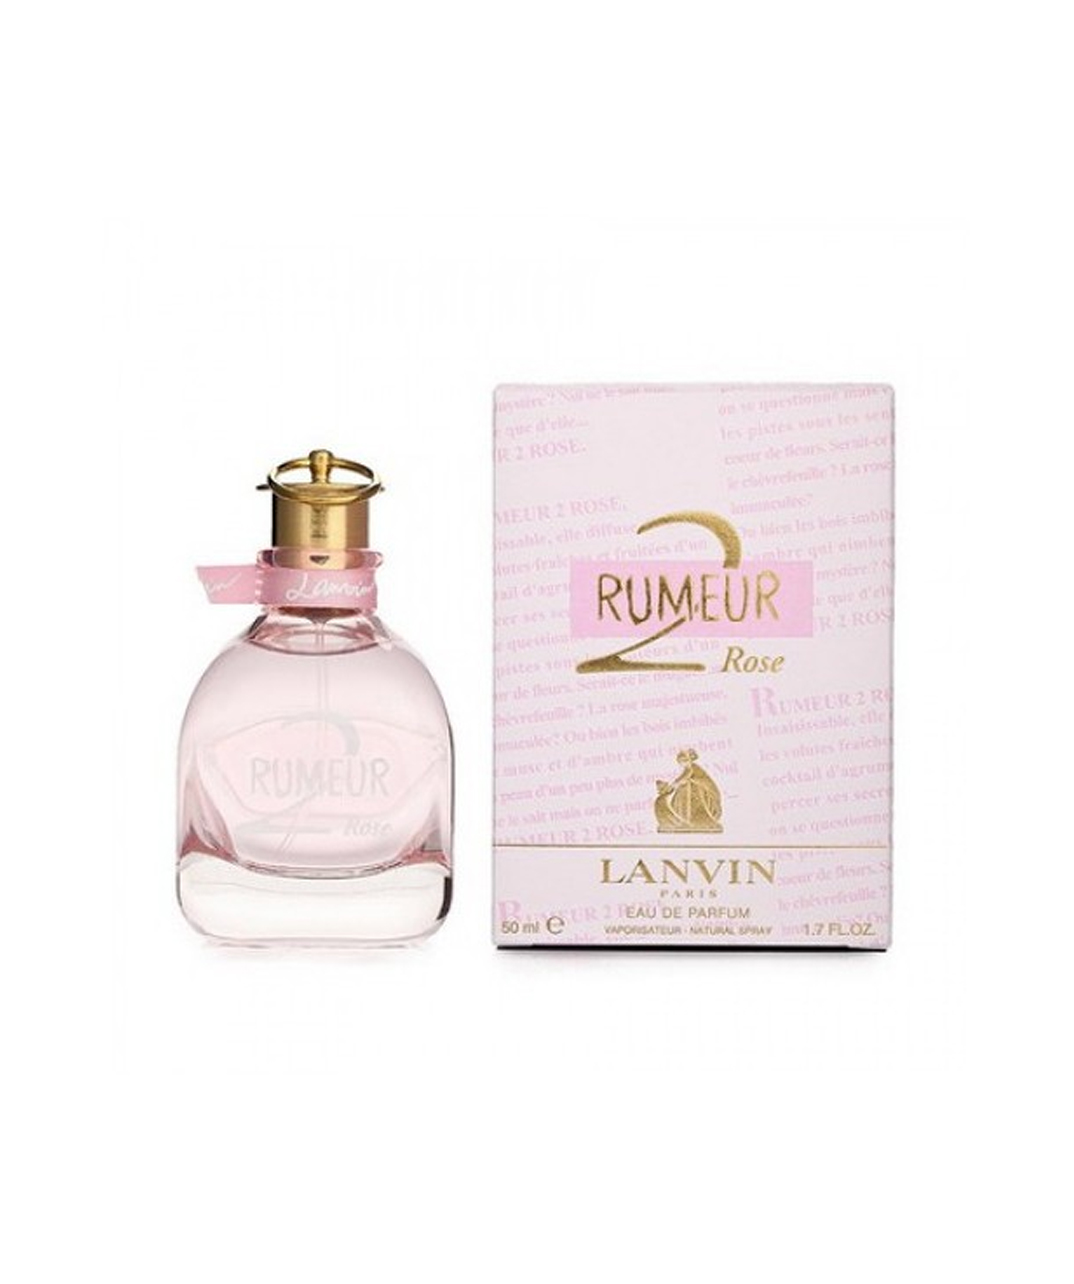 Perfume «Lanvin» Rumeur 2 Rose, for women, 50 ml